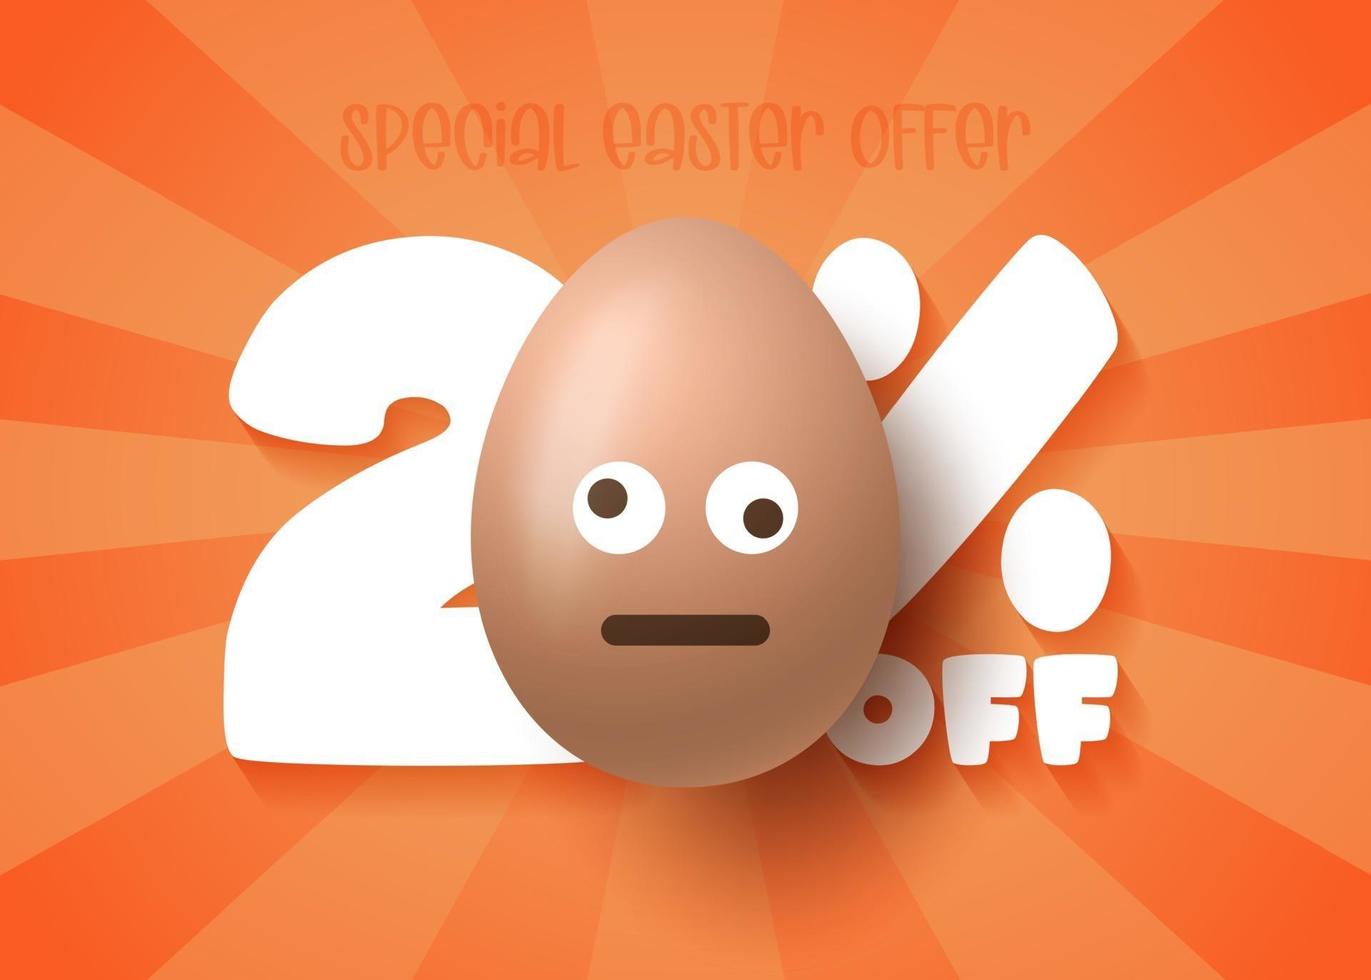 Happy Easter Sale banner. Easter Sale 20 off banner template with smile emoji brown Easter Eggs. Vector illustration